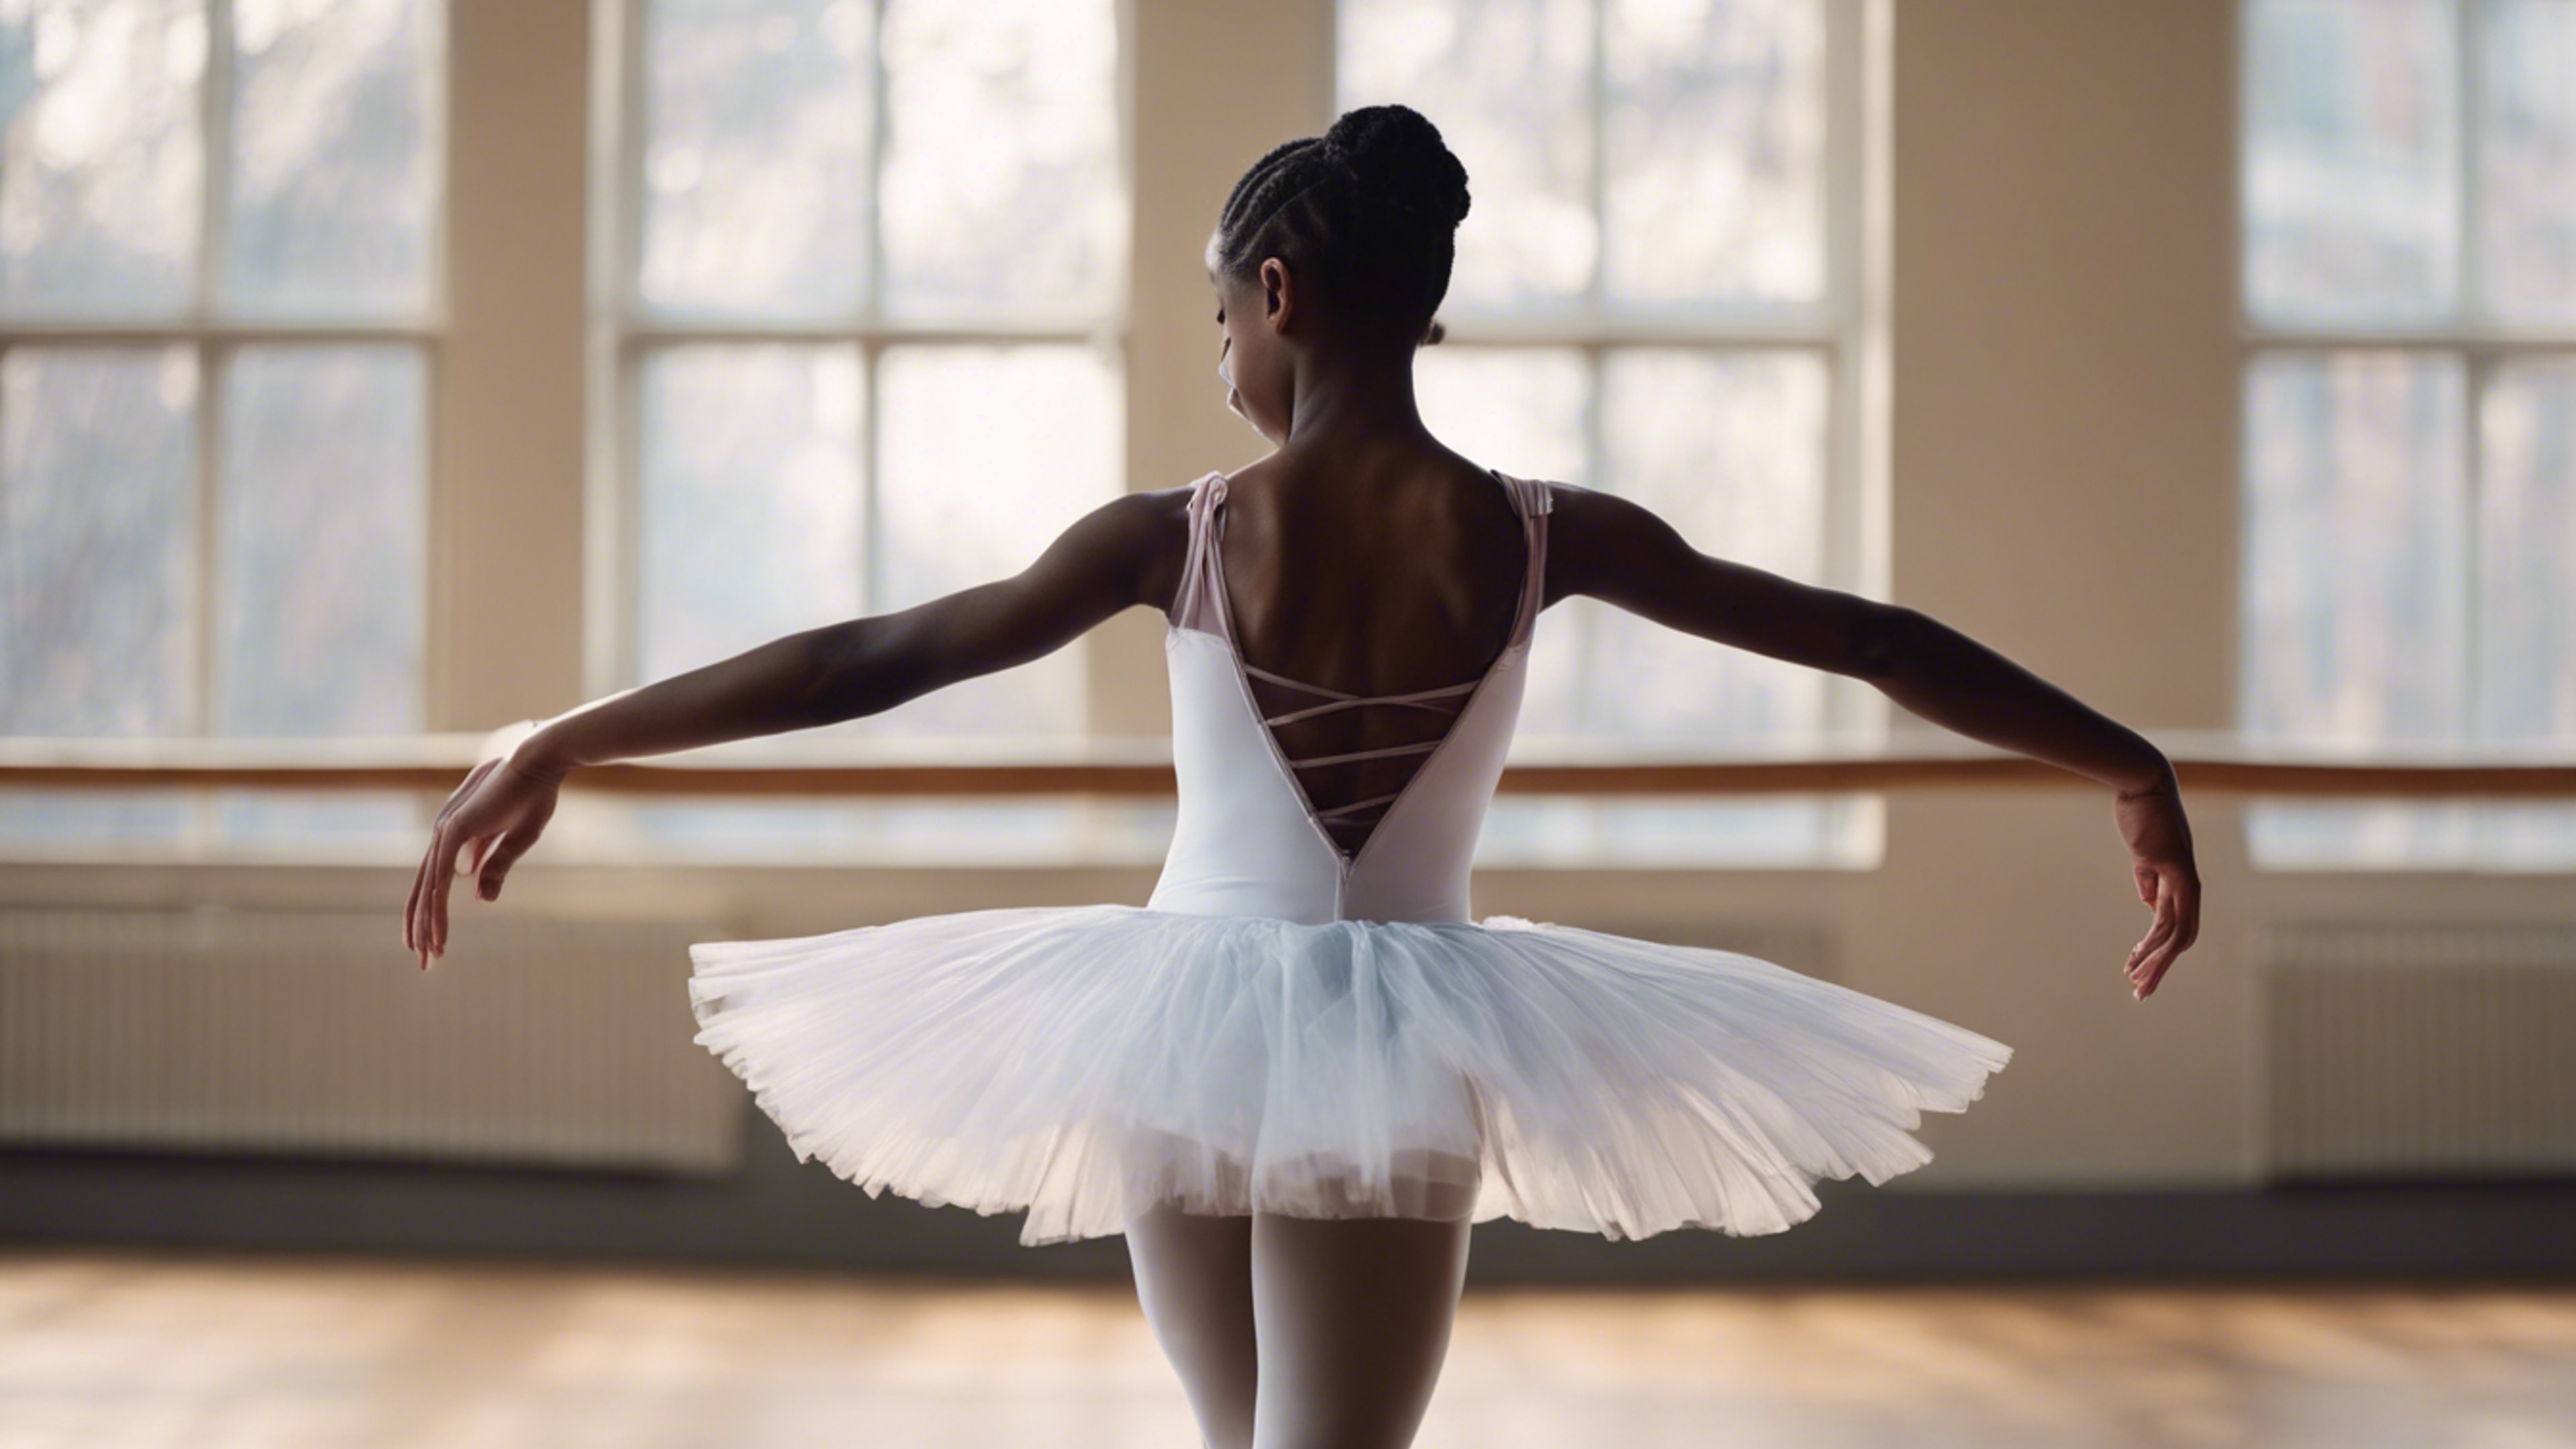 A young black girl practicing ballet in a beautiful satin tutu. Wallpaper[c9fc18550cde4bfca1b8]